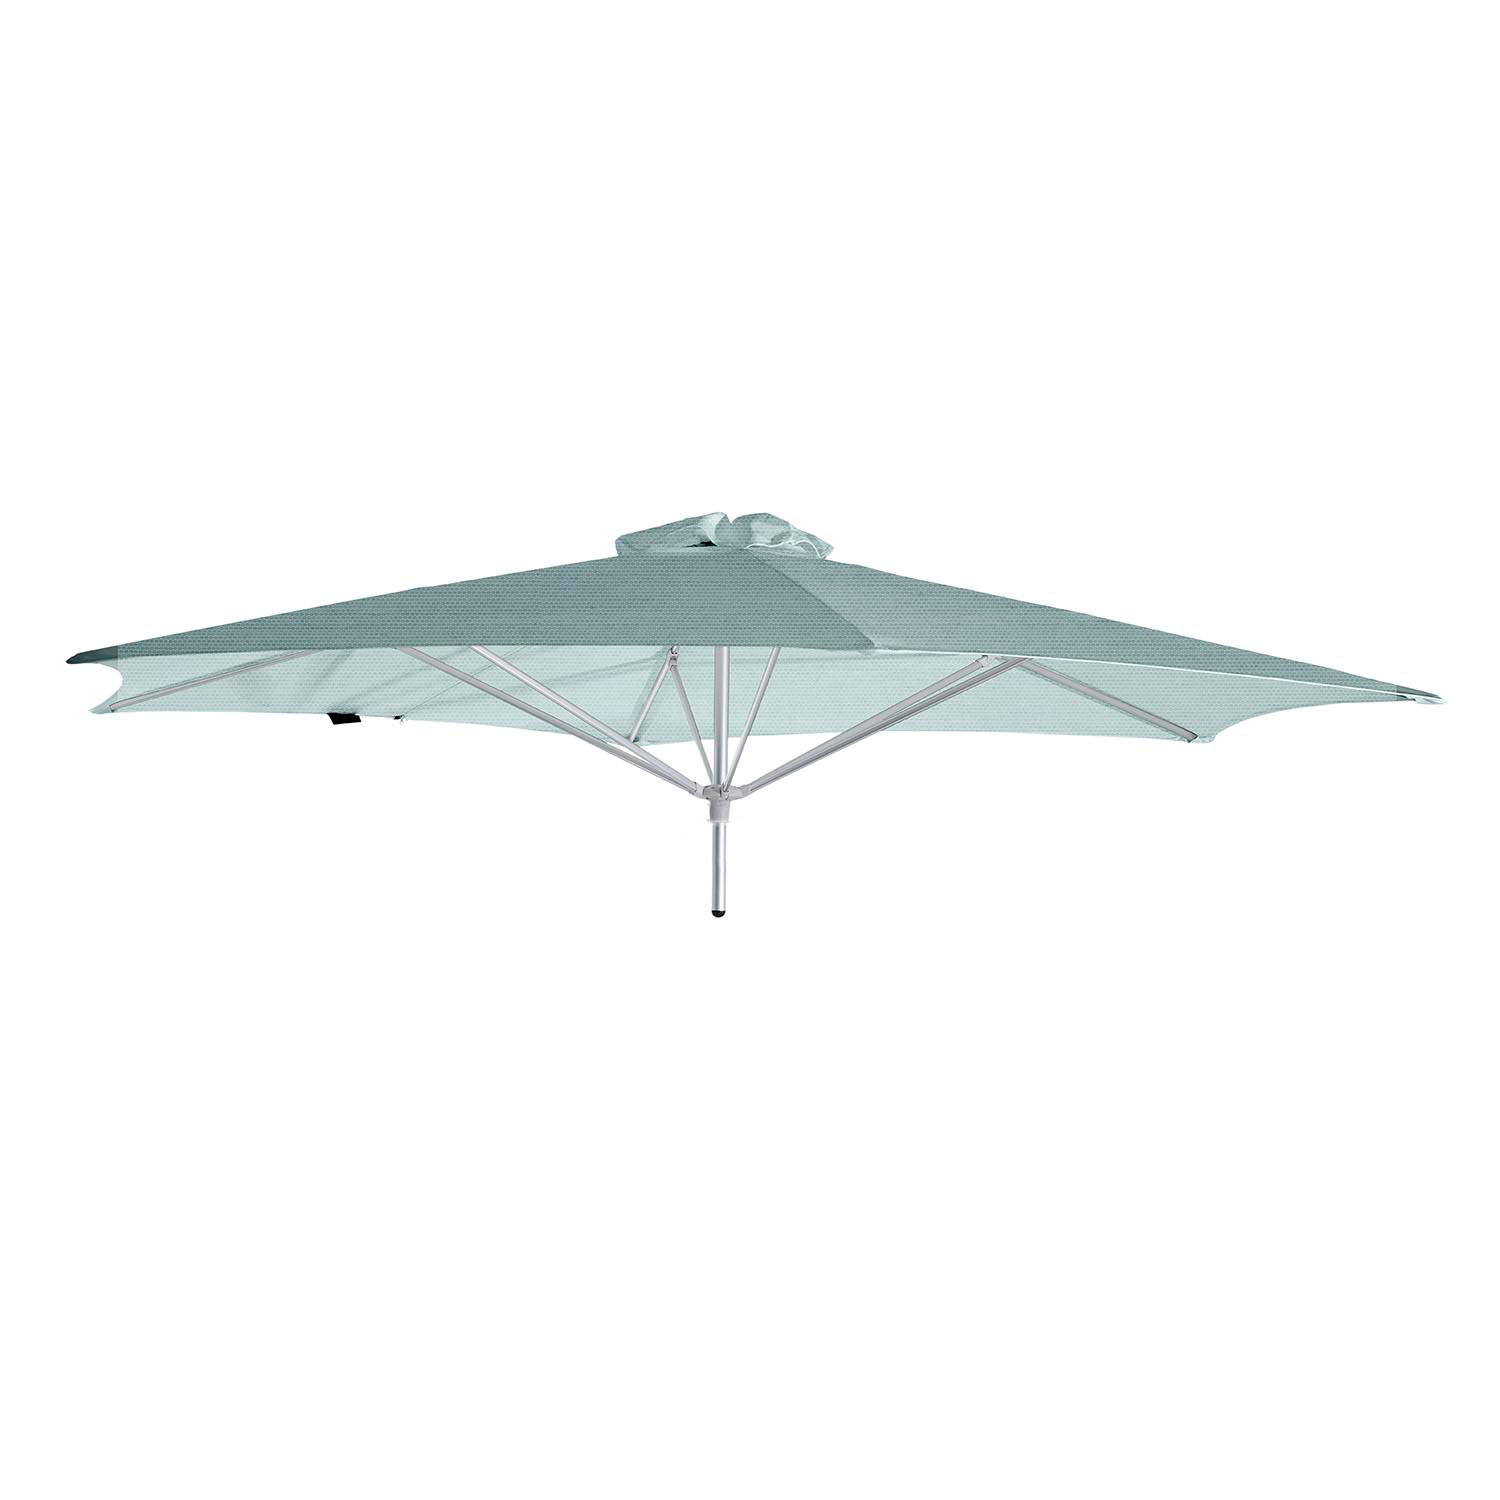 Paraflex Classic parasolkap 270cm - Sunbrella (Curacao)